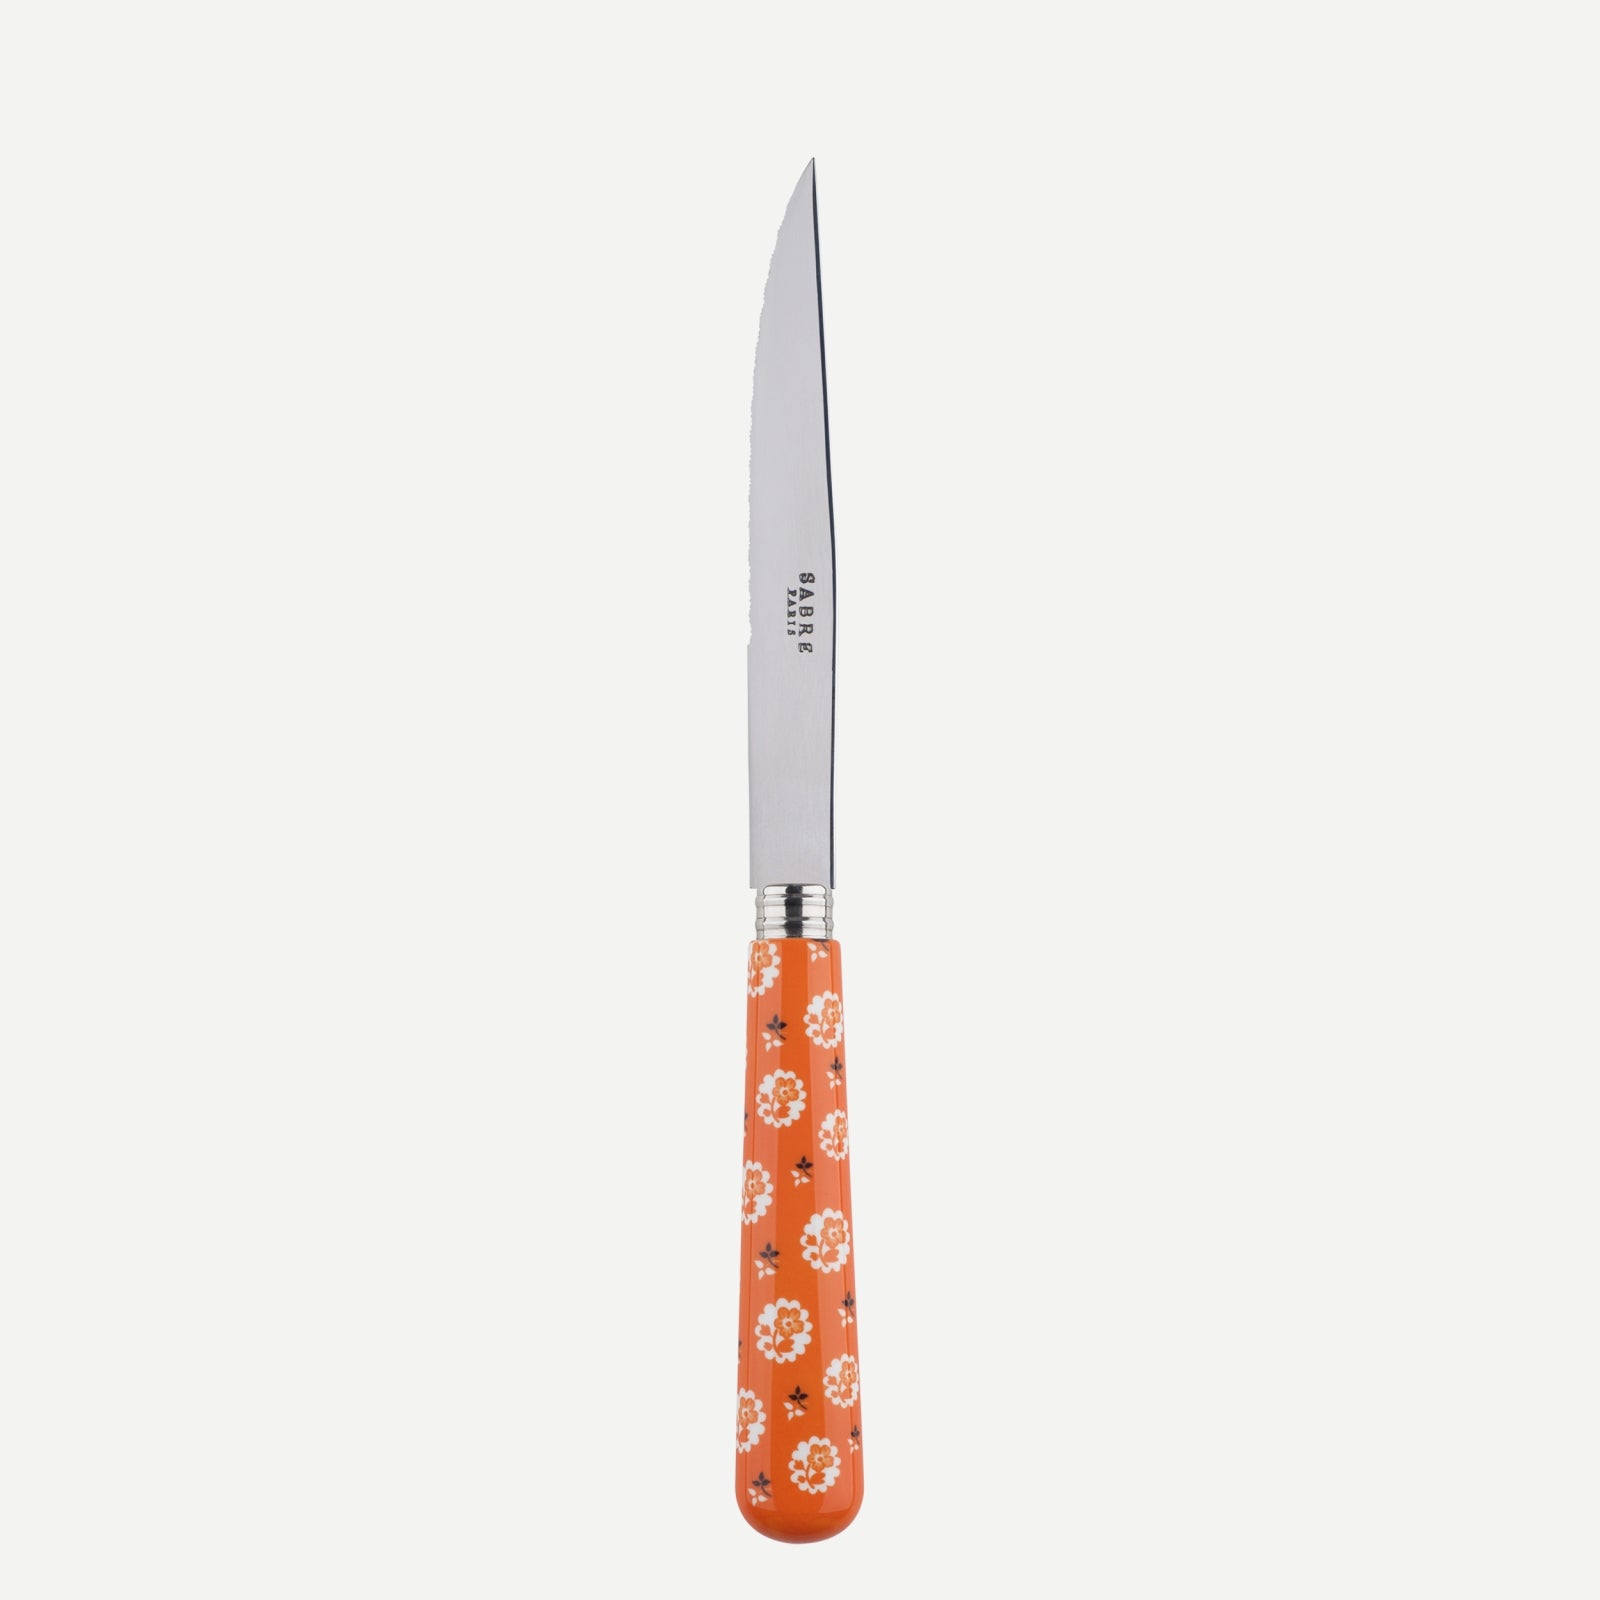 Steack knife - Provencal - Orange